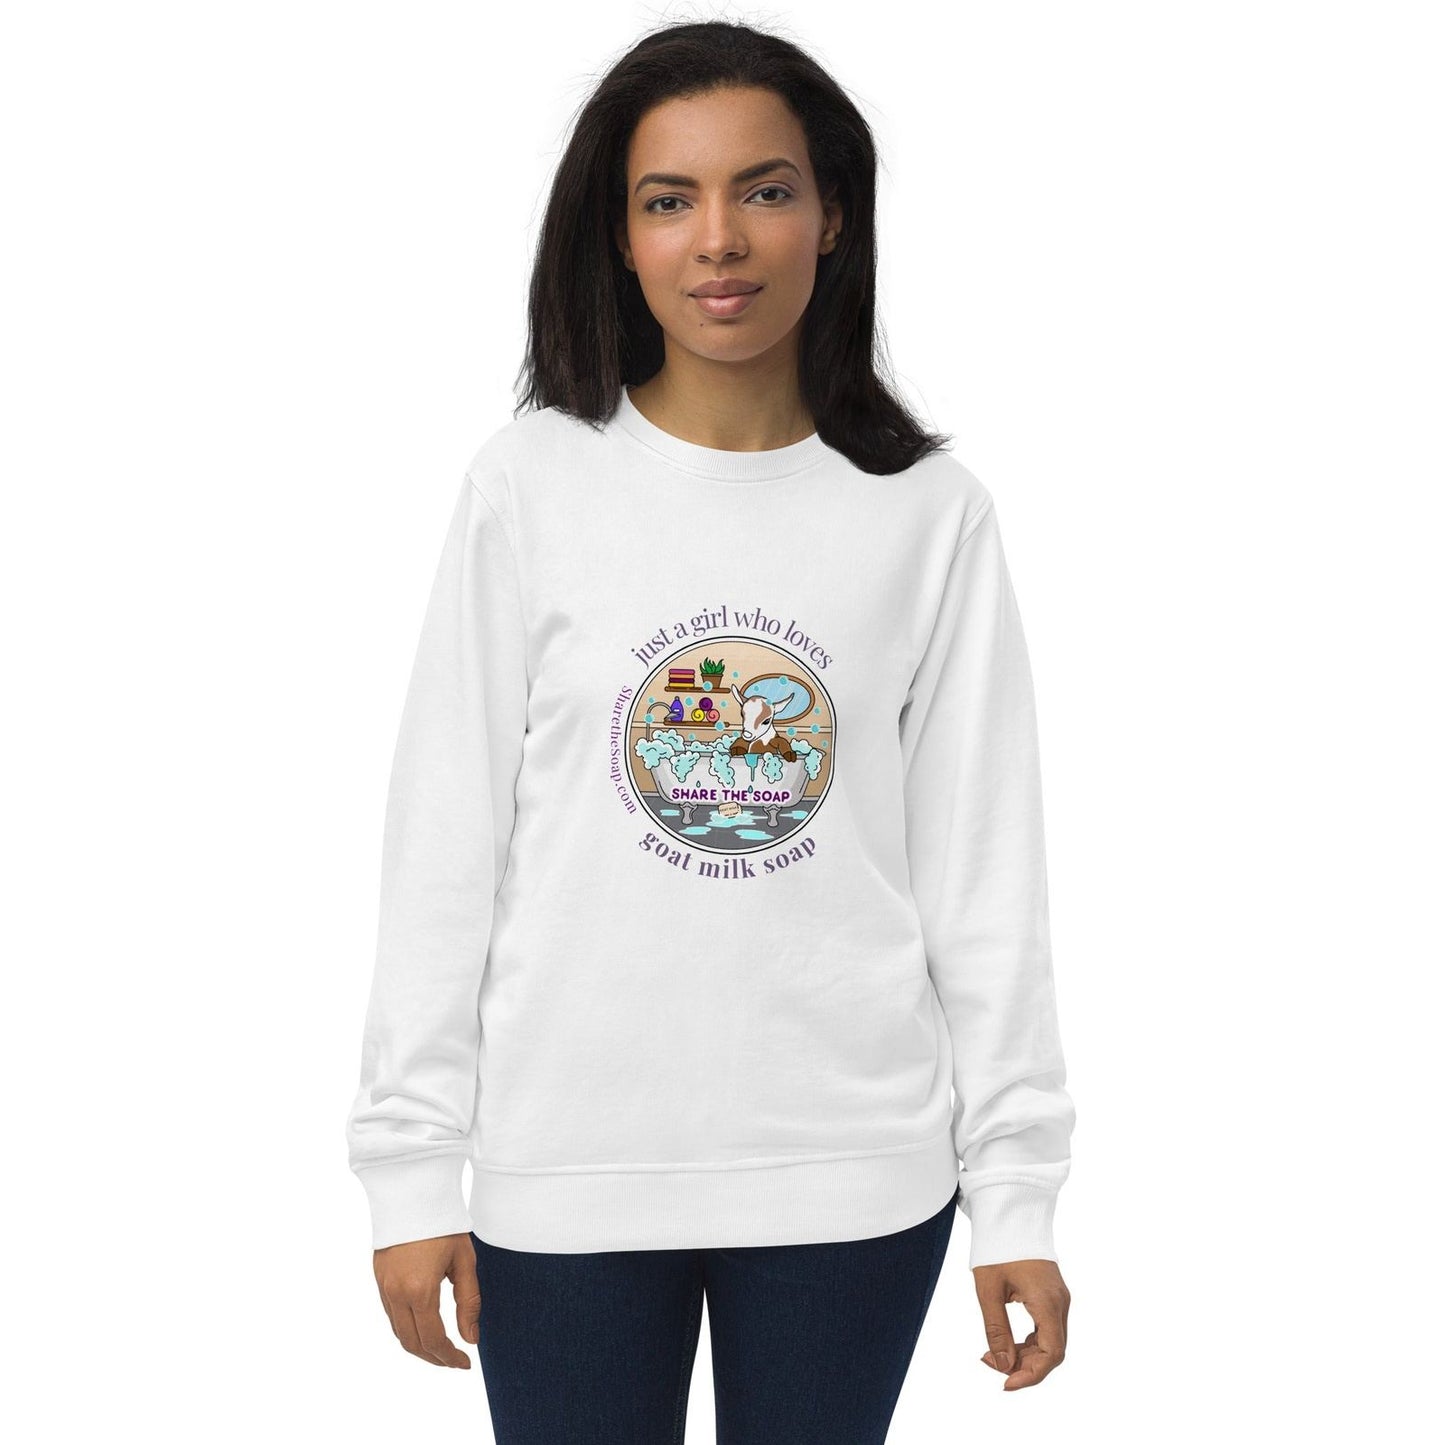 Just a Girl organic sweatshirt